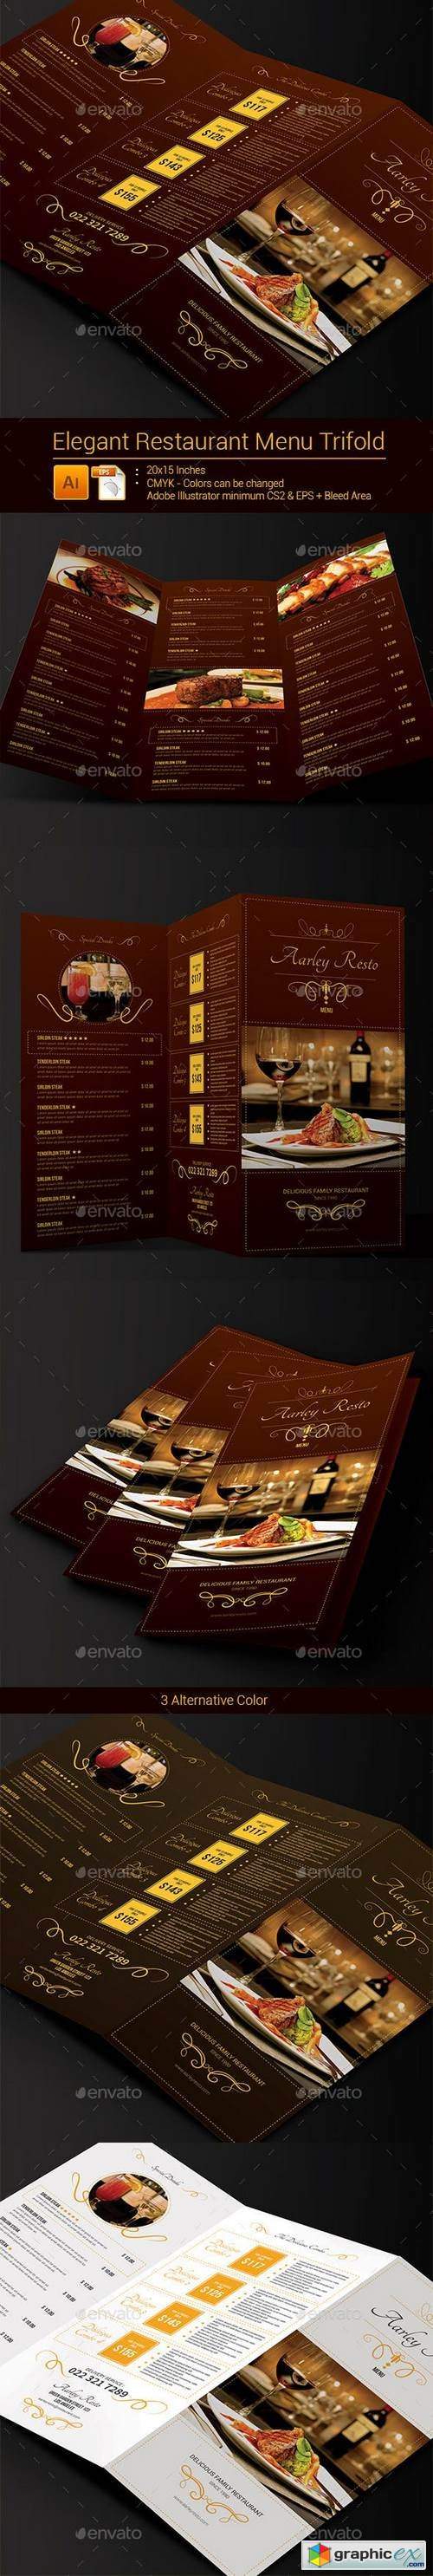 Elegant Restaurant Menu Trifold 9137918